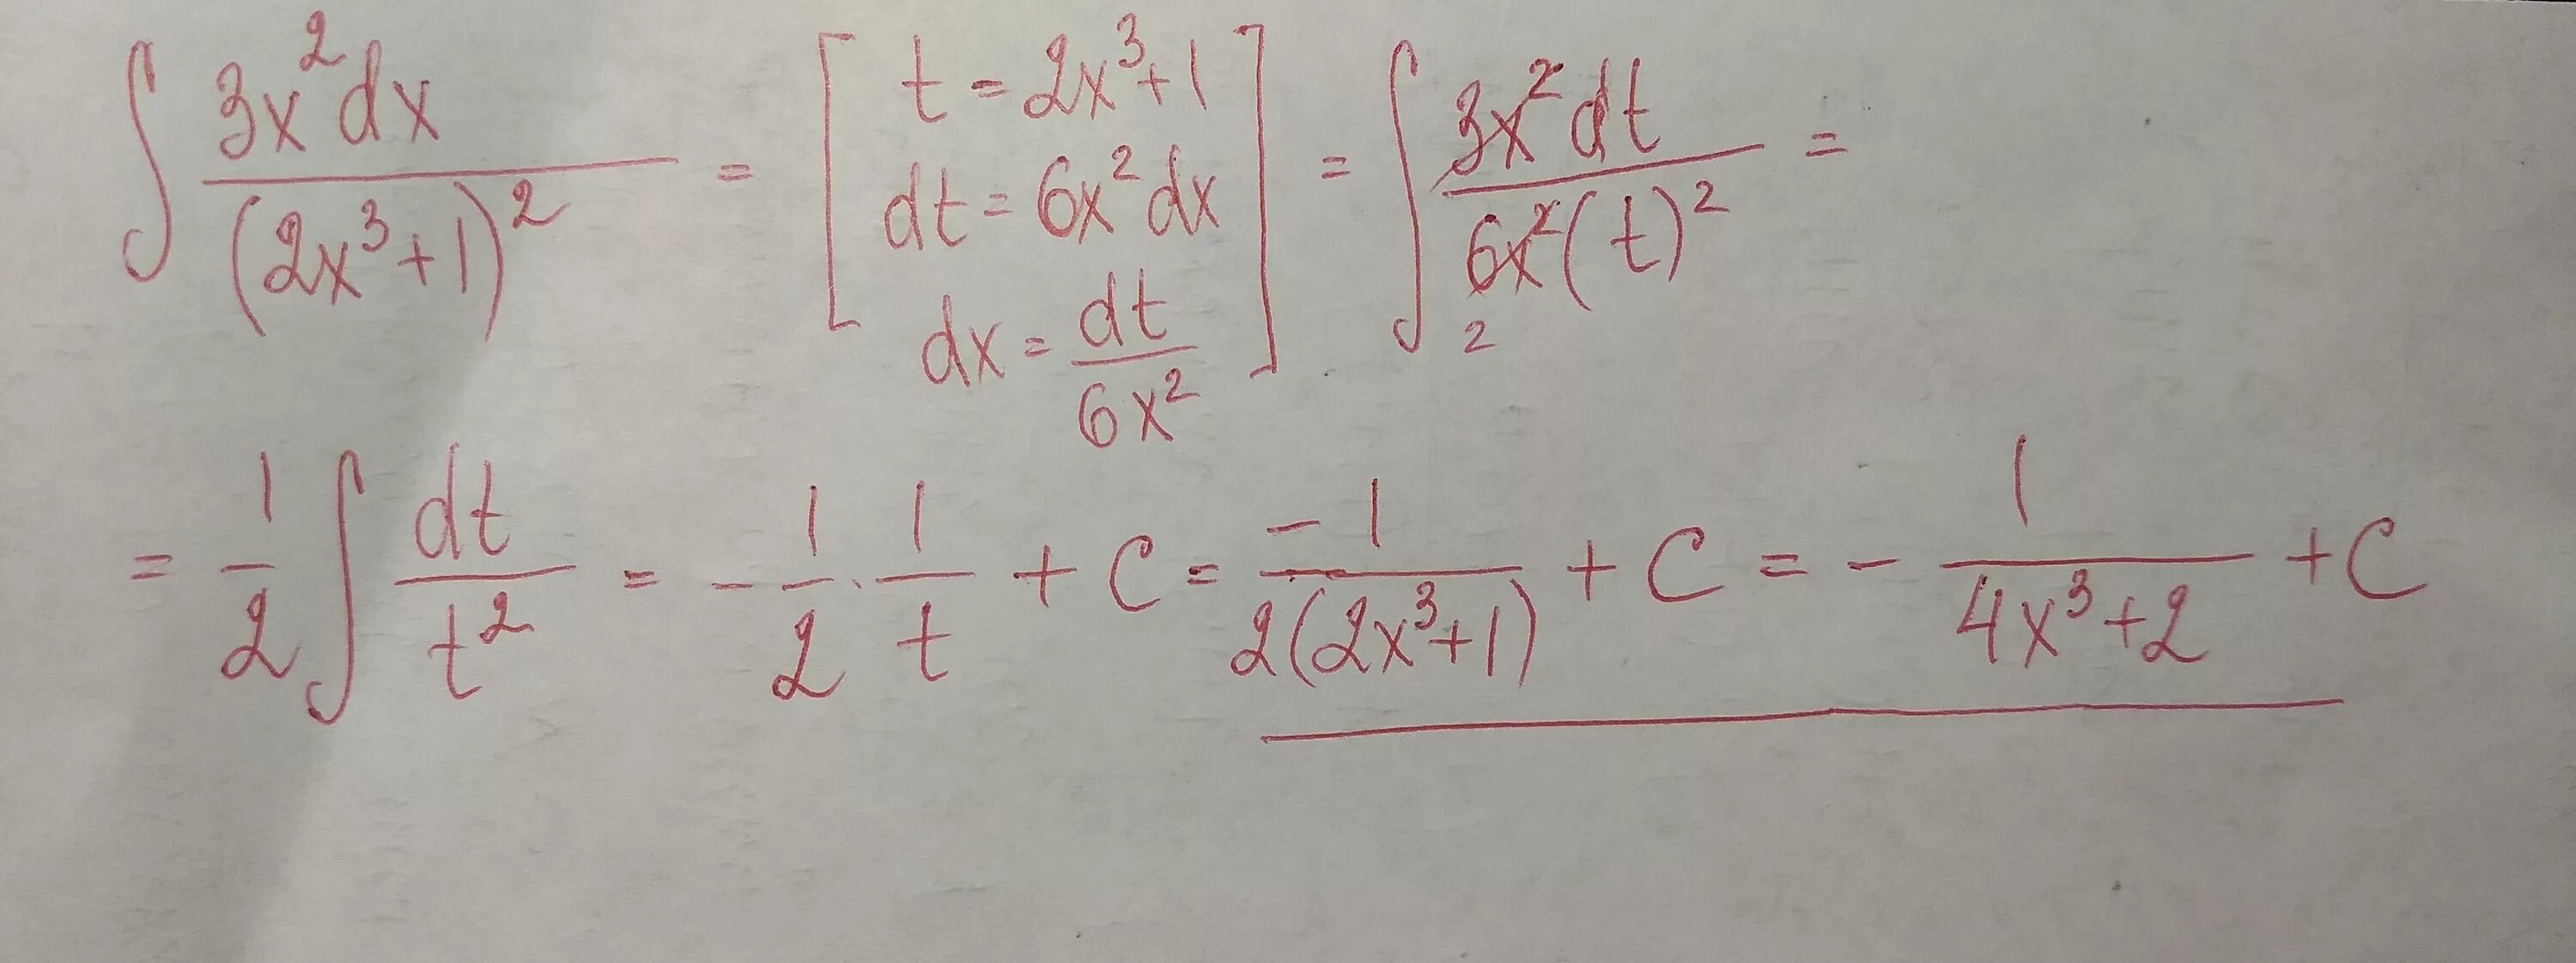 Интеграл = DX/ (2+X)^3. 3dx/x+3 интеграл. В результате подстановки t 3x 2 интеграл приводится к виду. Интеграл методом подстановки (3x-2)^5 DX.